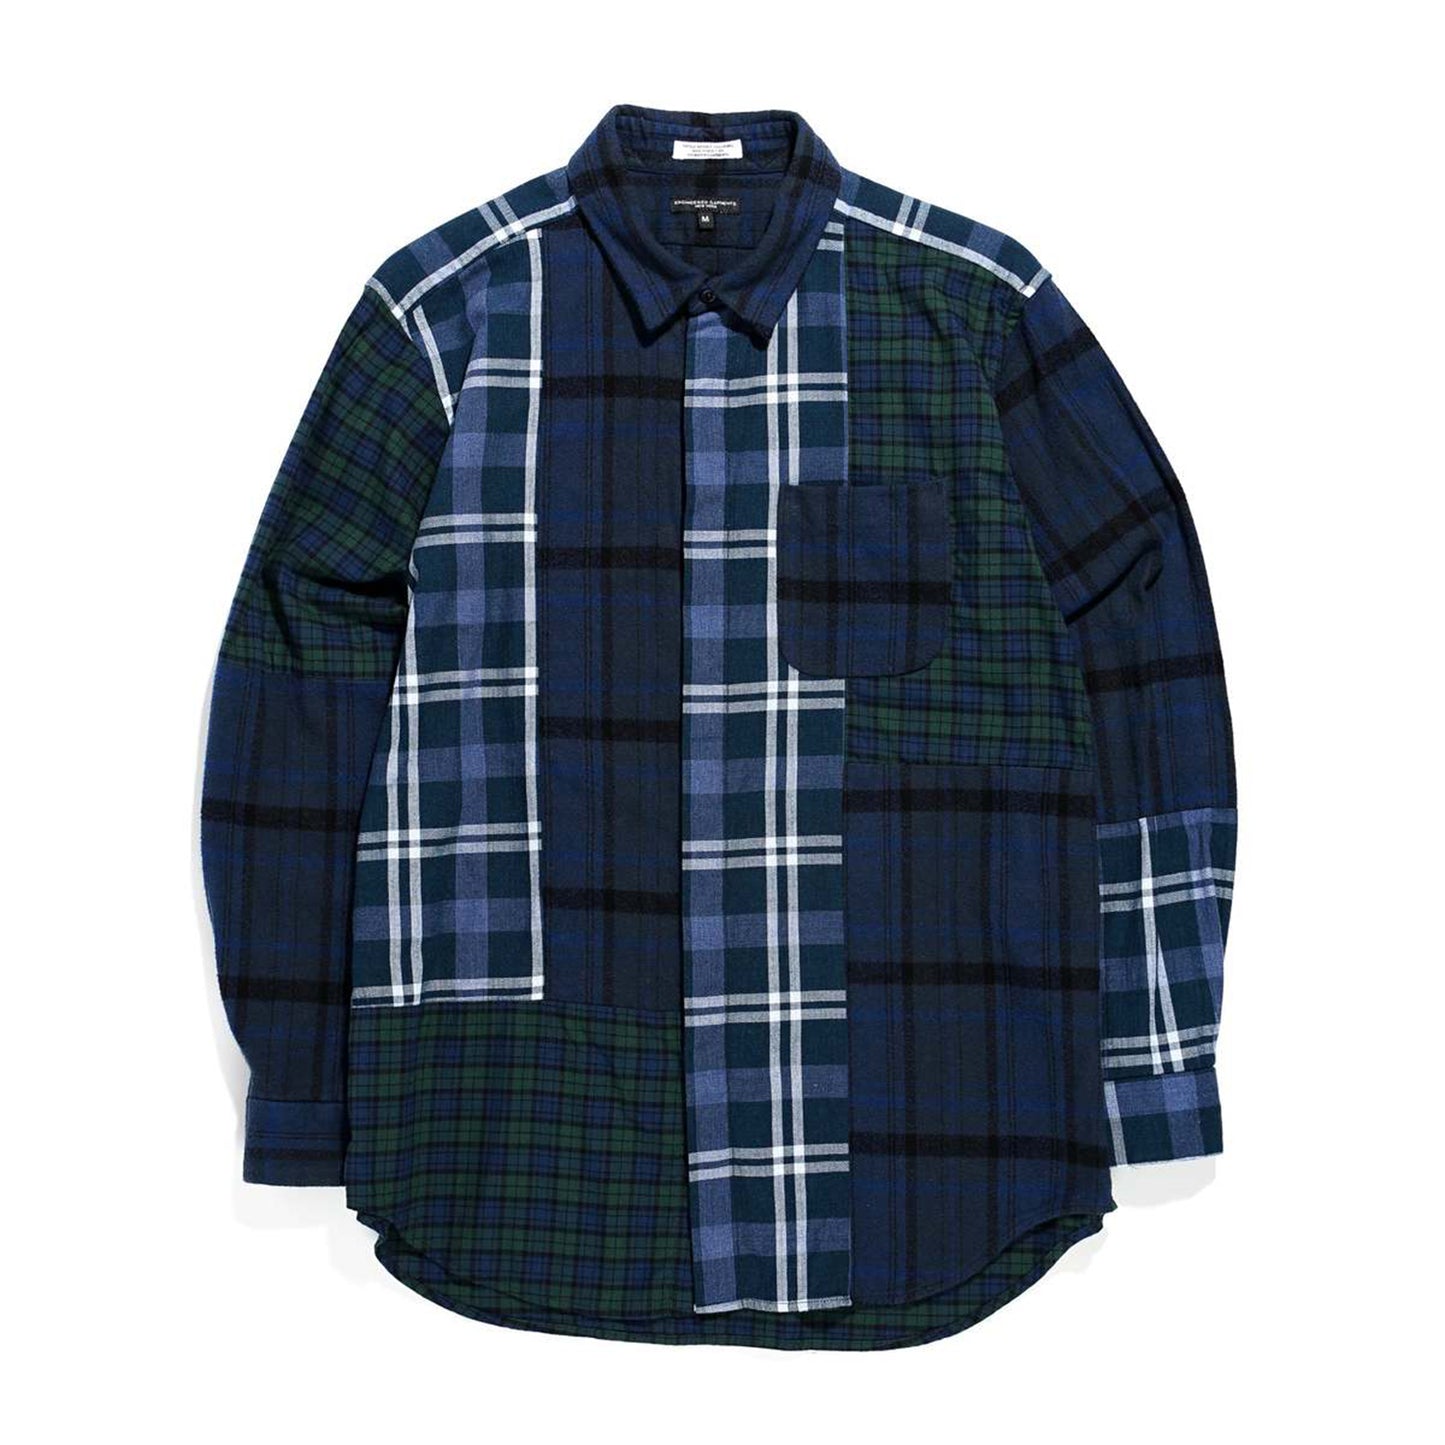 Combo Short Collar Shirt - Navy Black Plaid Flannel